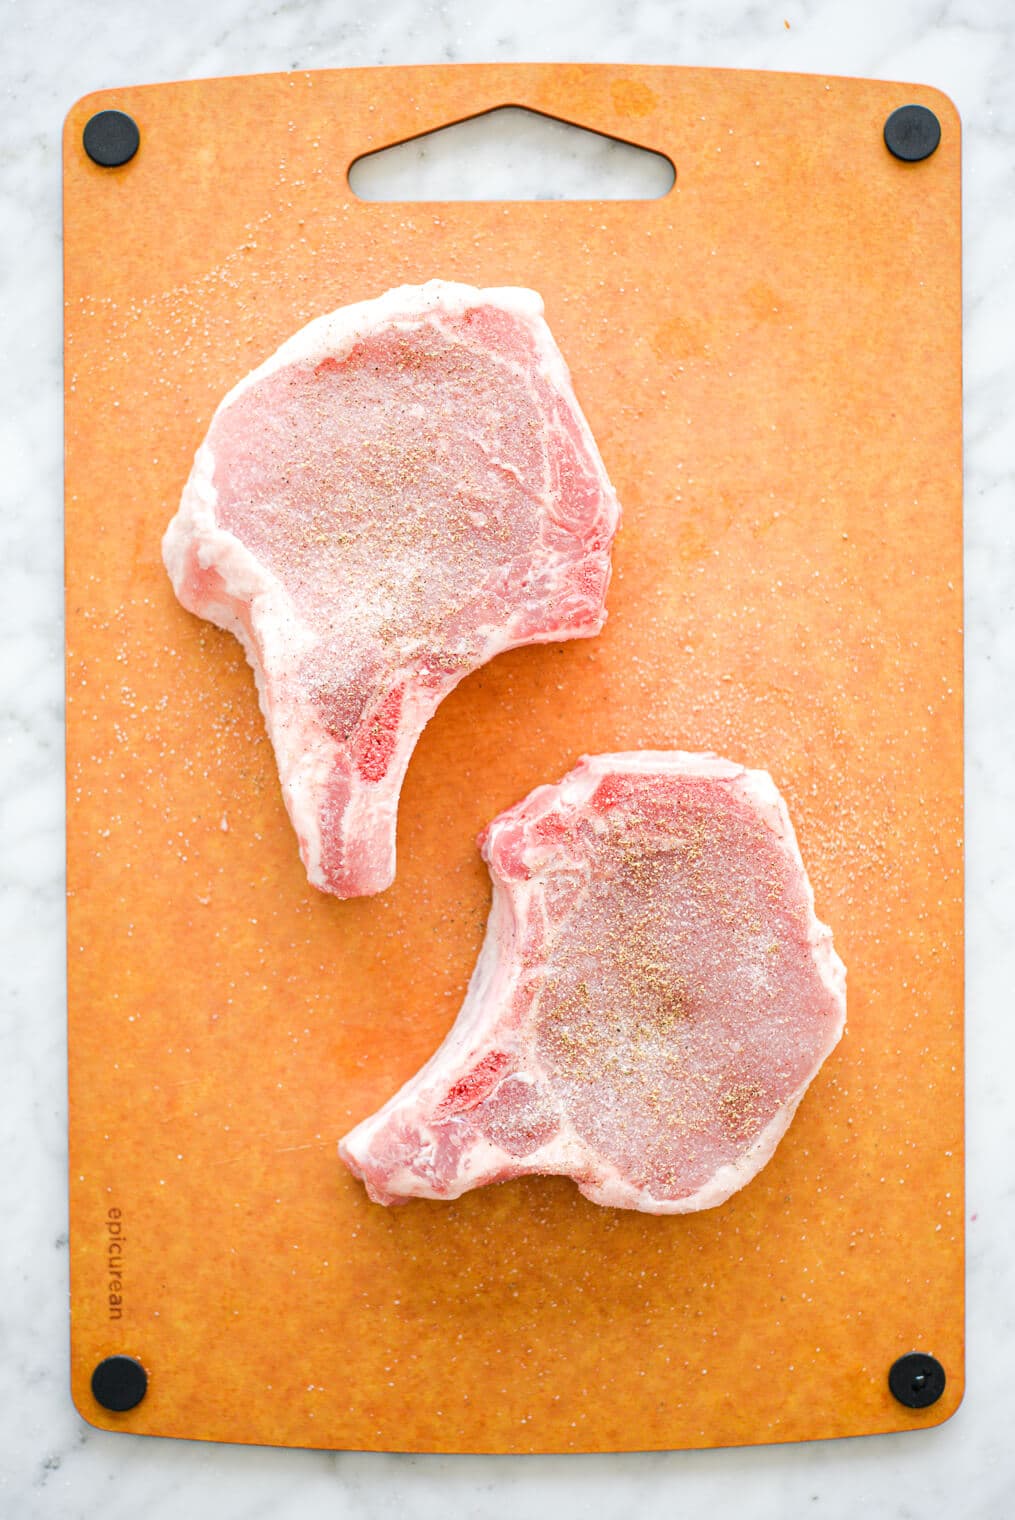 Two, raw bone-in pork chops on a cutting board seasoned with salt and pepper.